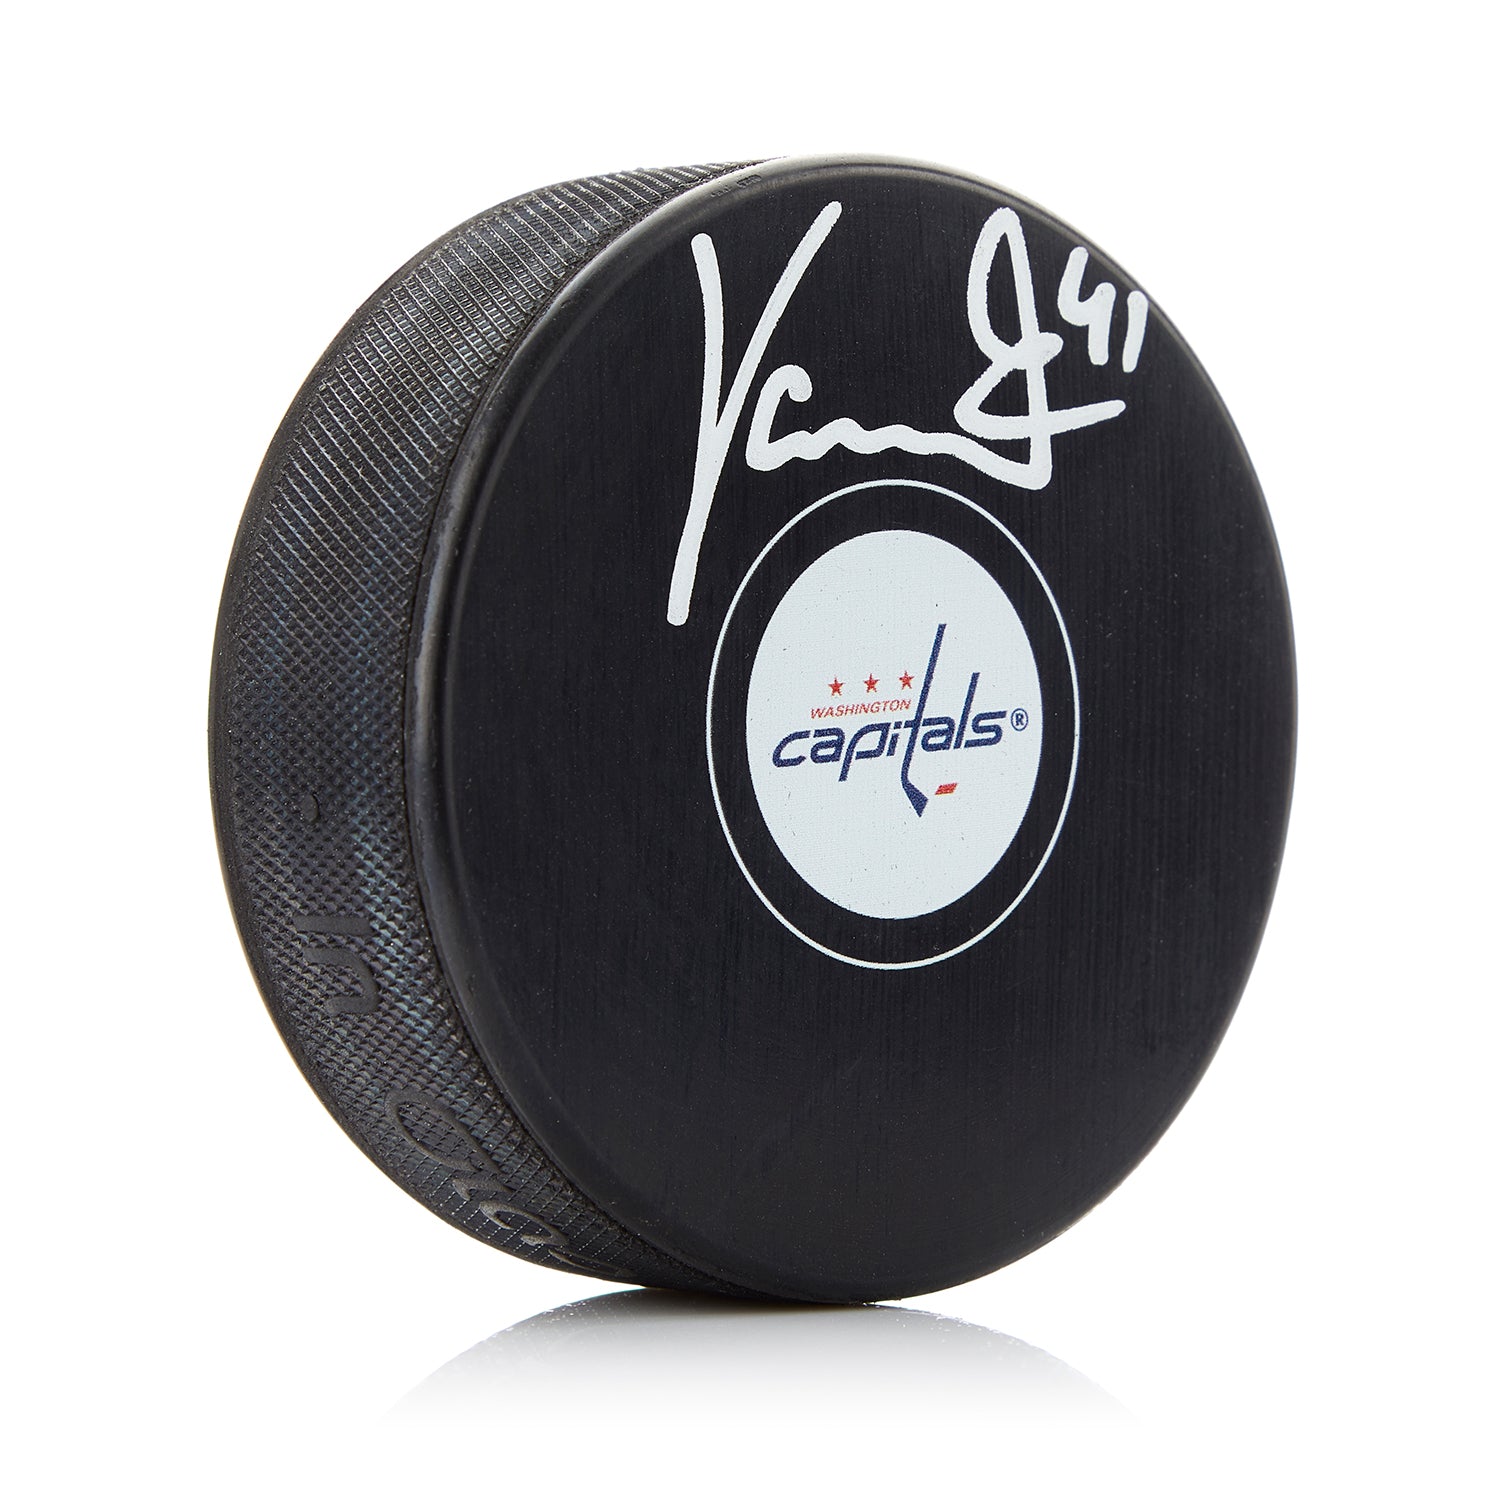 Vitek Vanecek Autographed Washington Capitals Hockey Puck